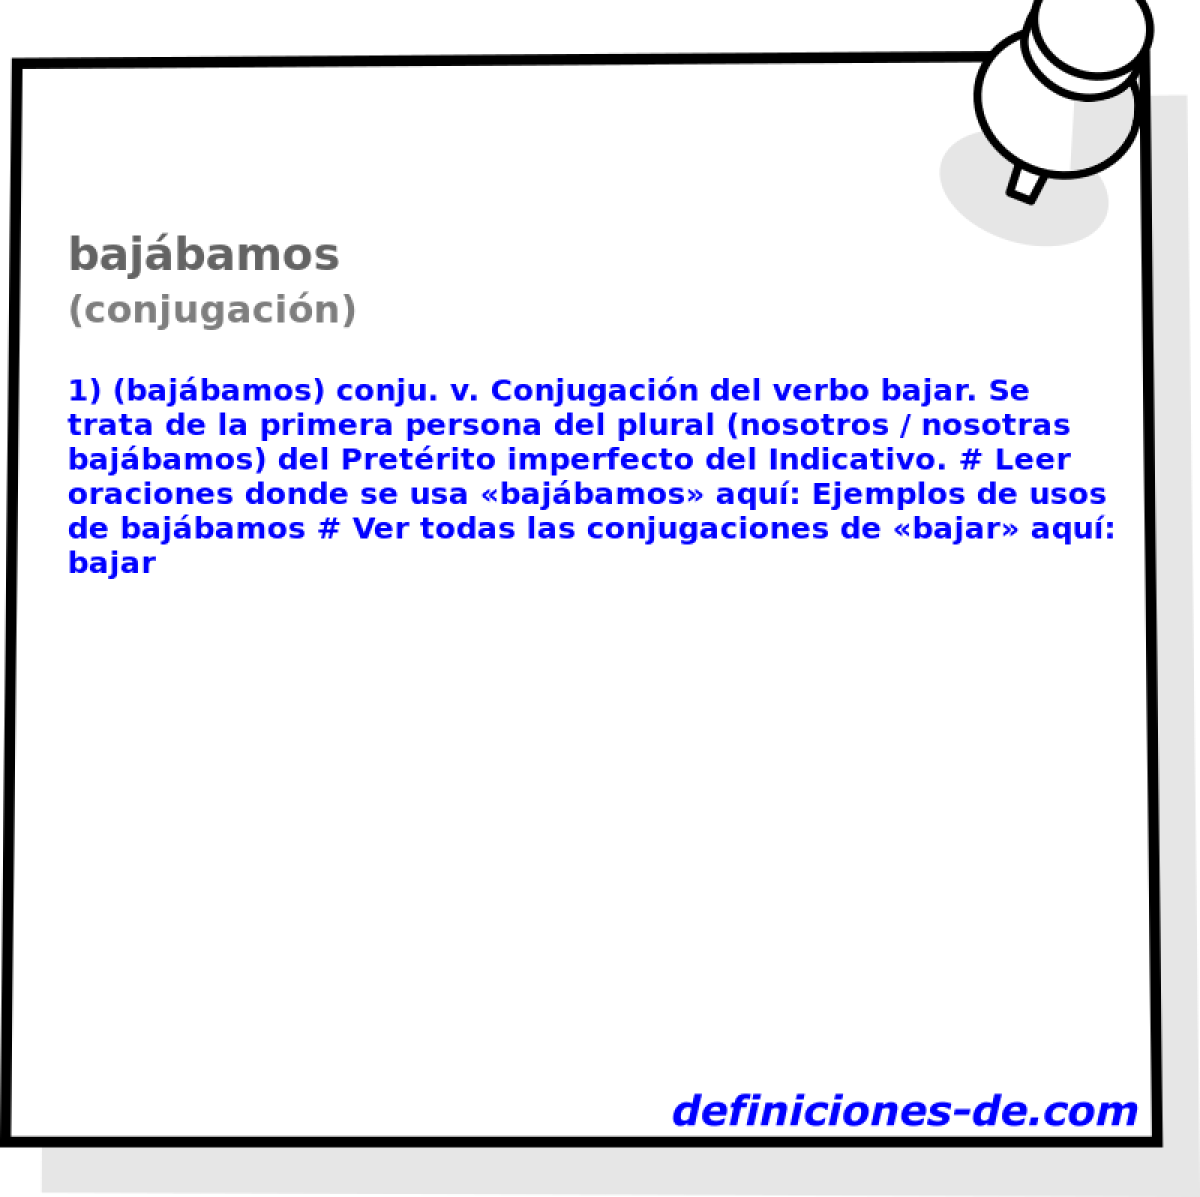 bajbamos (conjugacin)